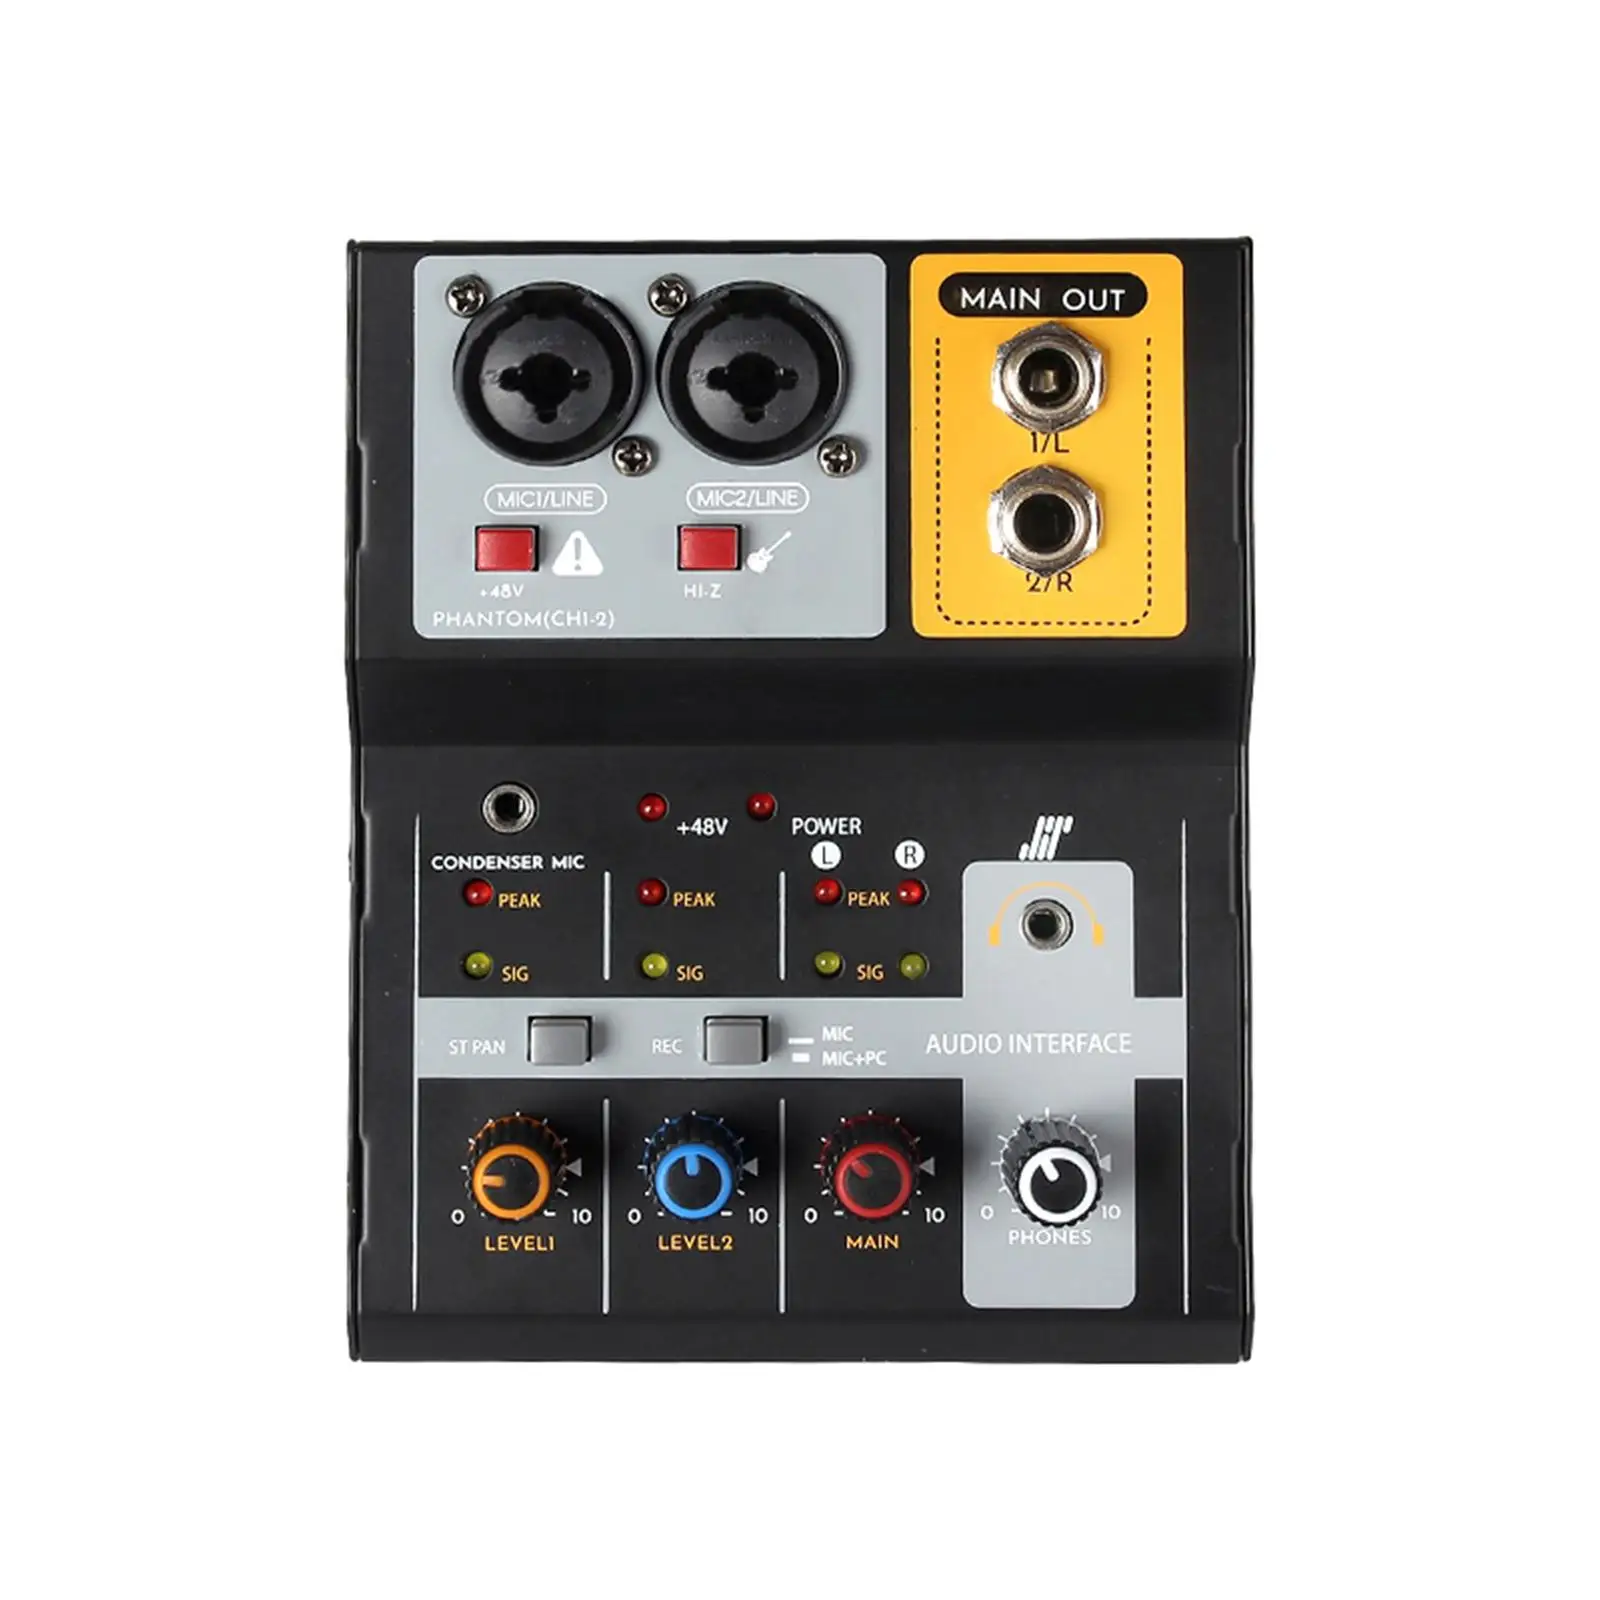 Audio Mixer Controller Easy Connection Compact Audio Amplifier Audio Mixer for KTV Studio Show Stereo Recording Podcasting Live